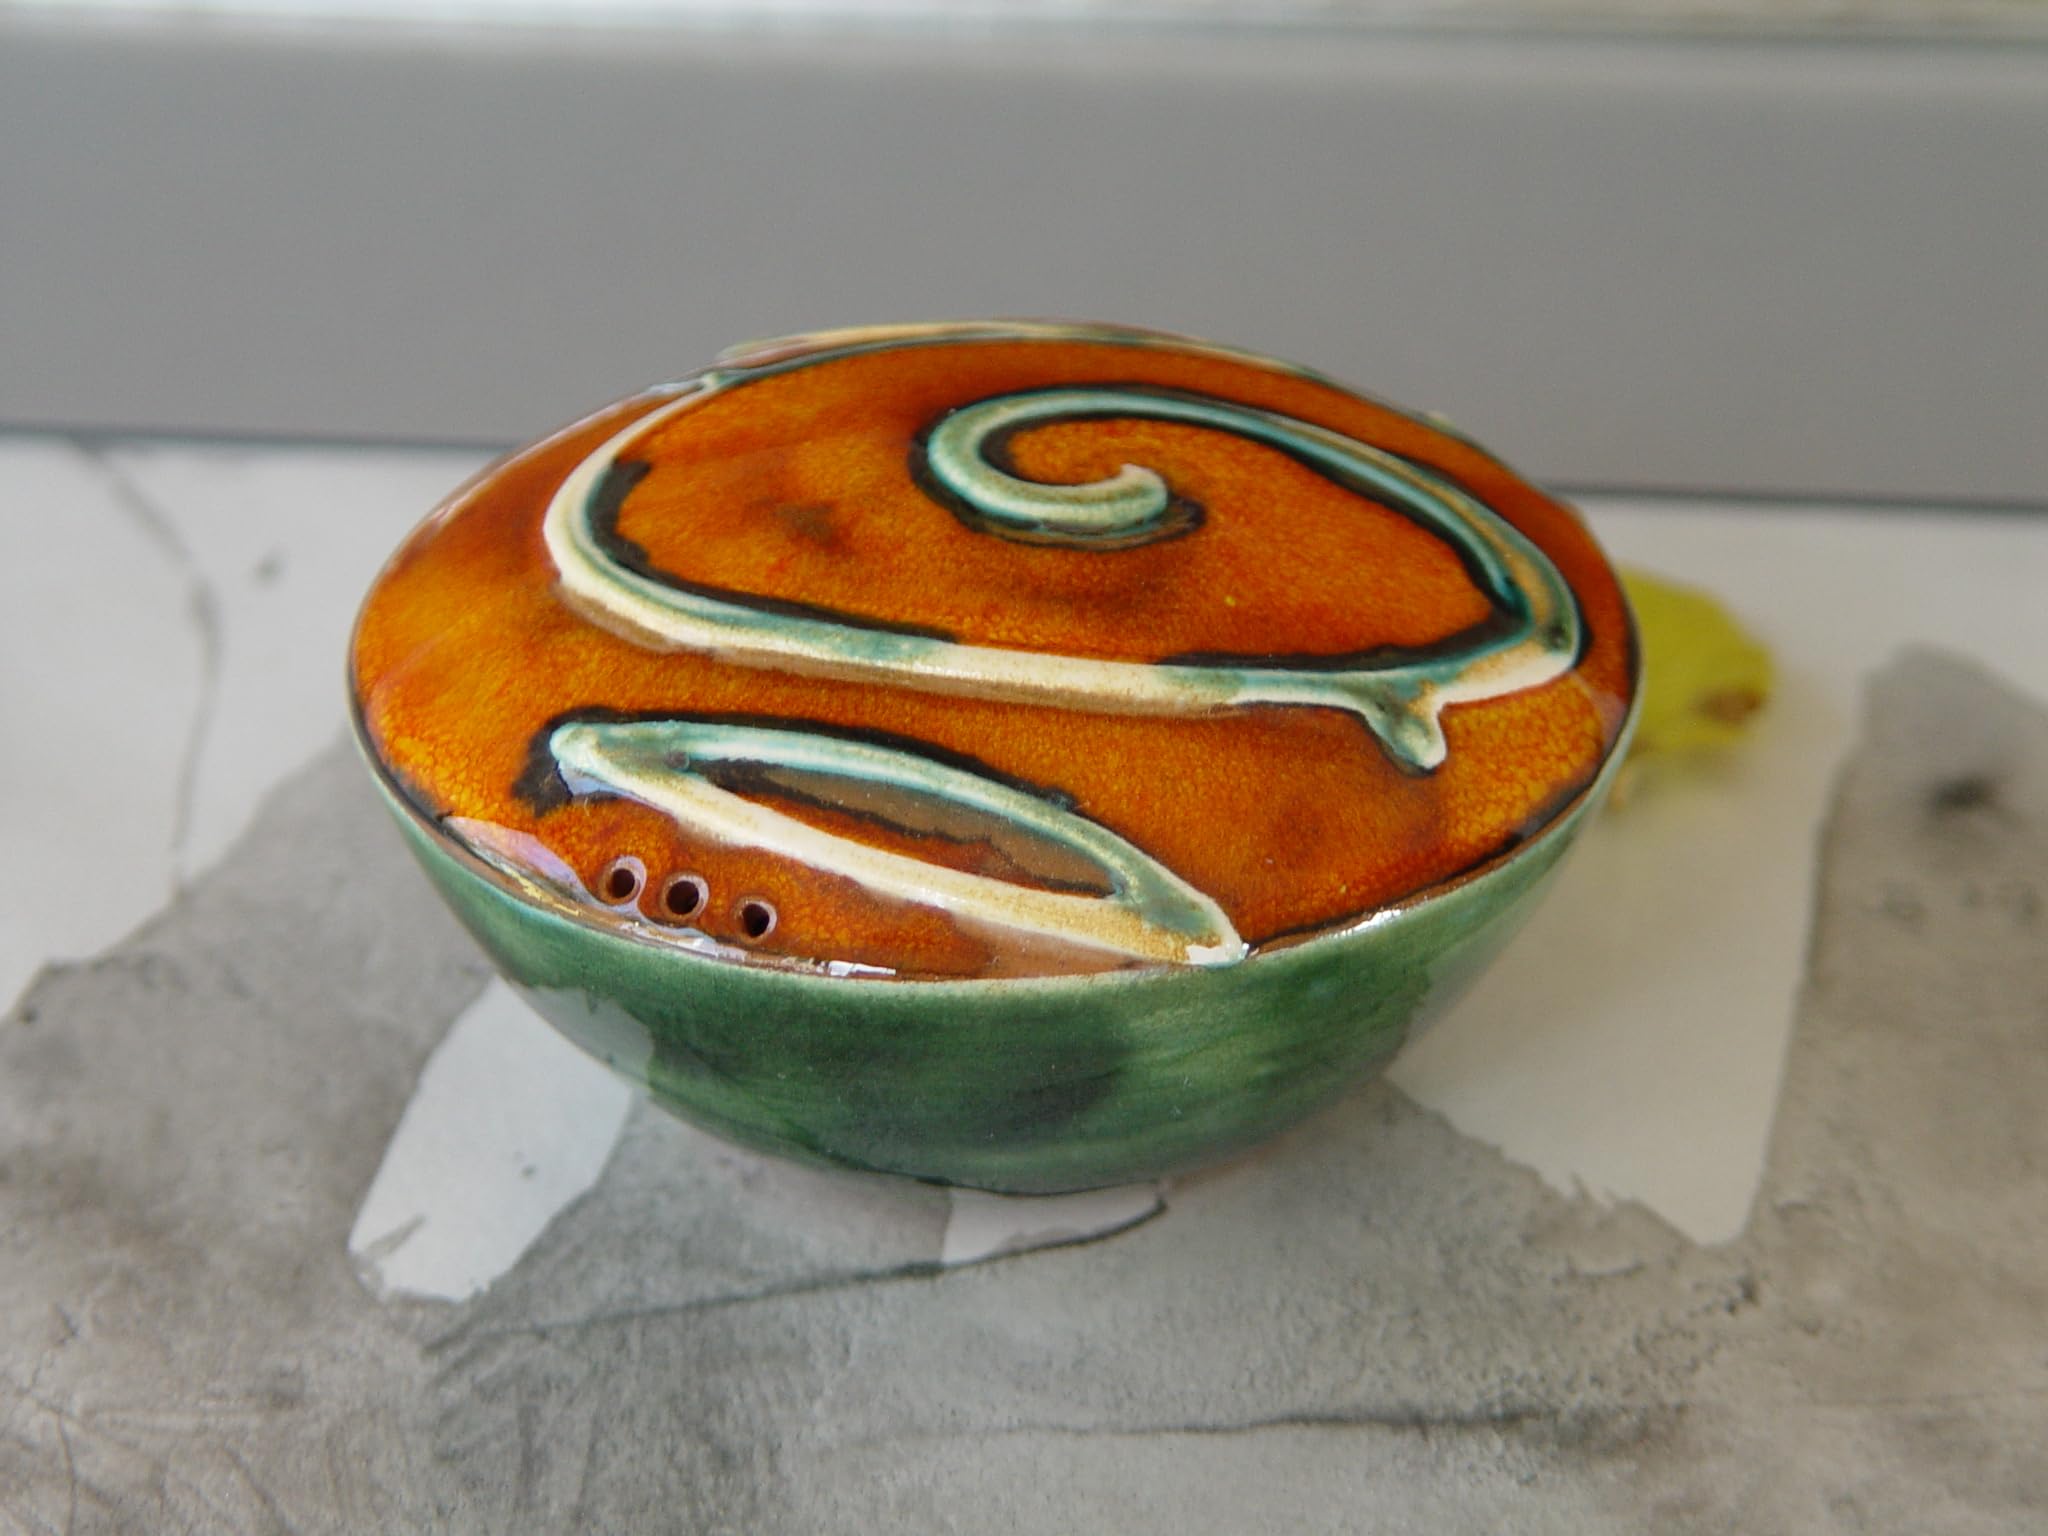 Handmade Pottery Salt or Pepper Shaker - Colorful Orange and Green Ceramic Kitchen Decor - Danko Pottery - Unique Christmas Gift